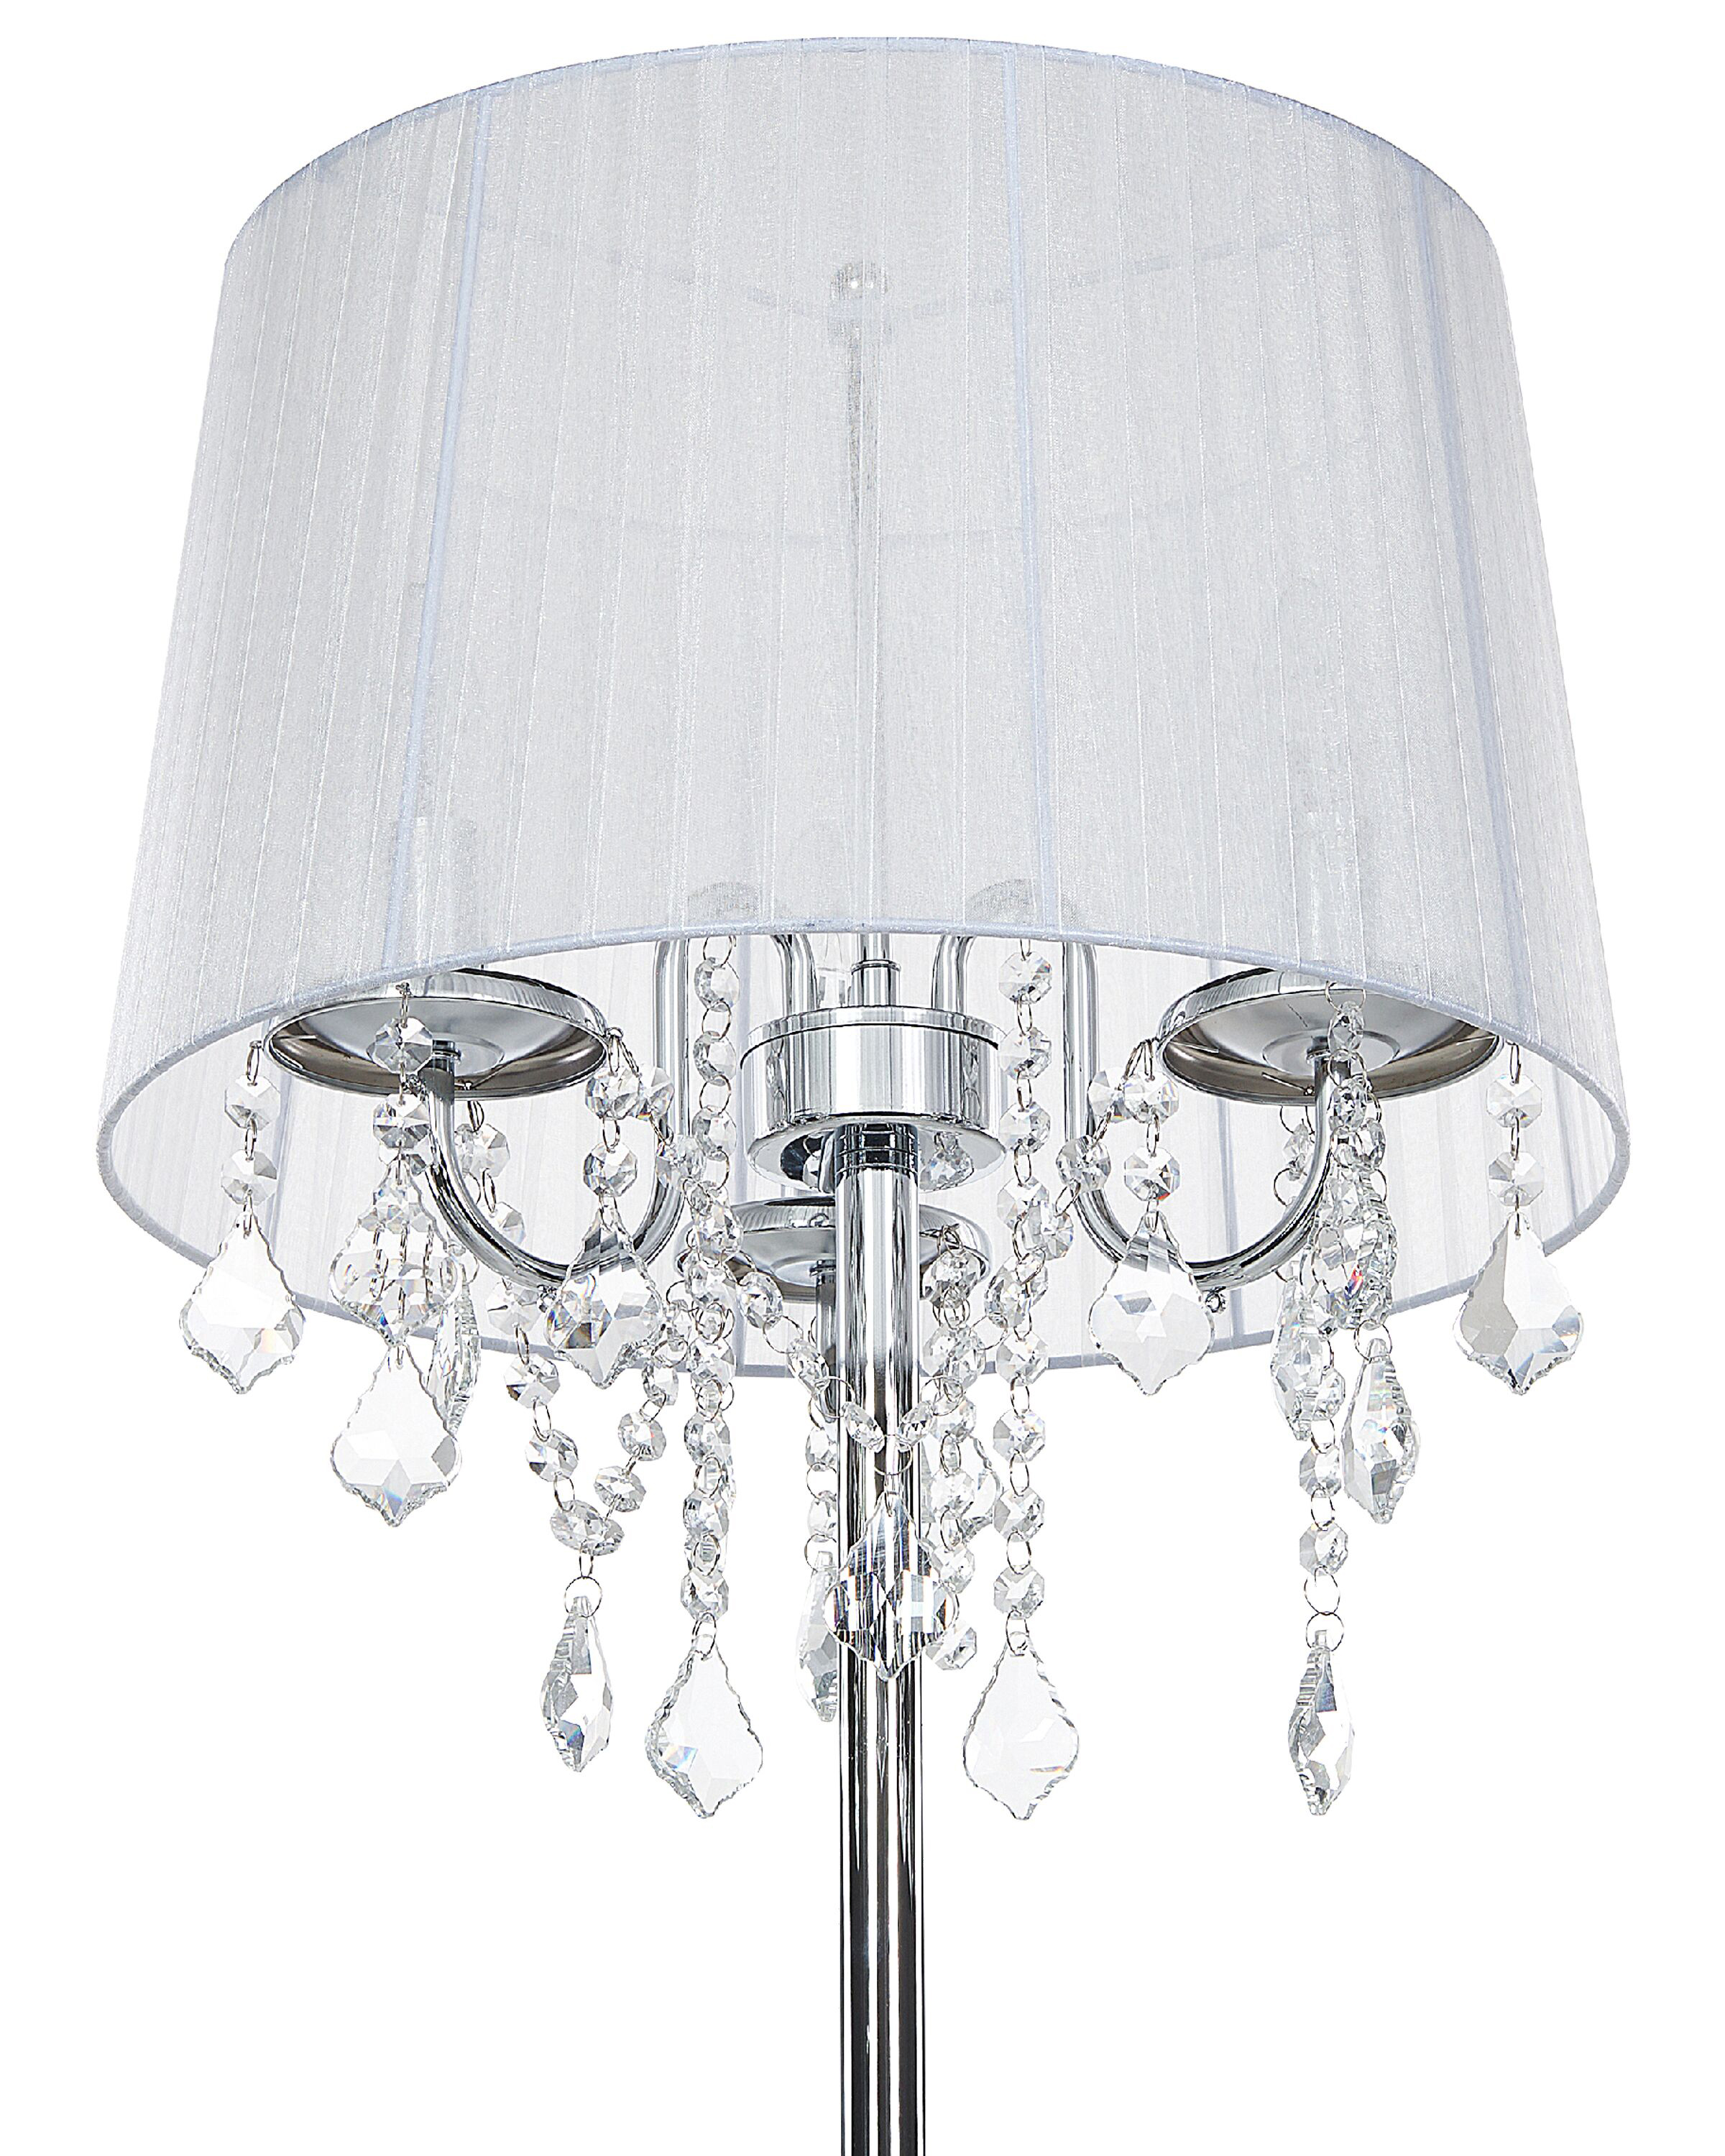 Stehlampe weiß Kristall-Optik 170 cm Trommelform EVANS_850432